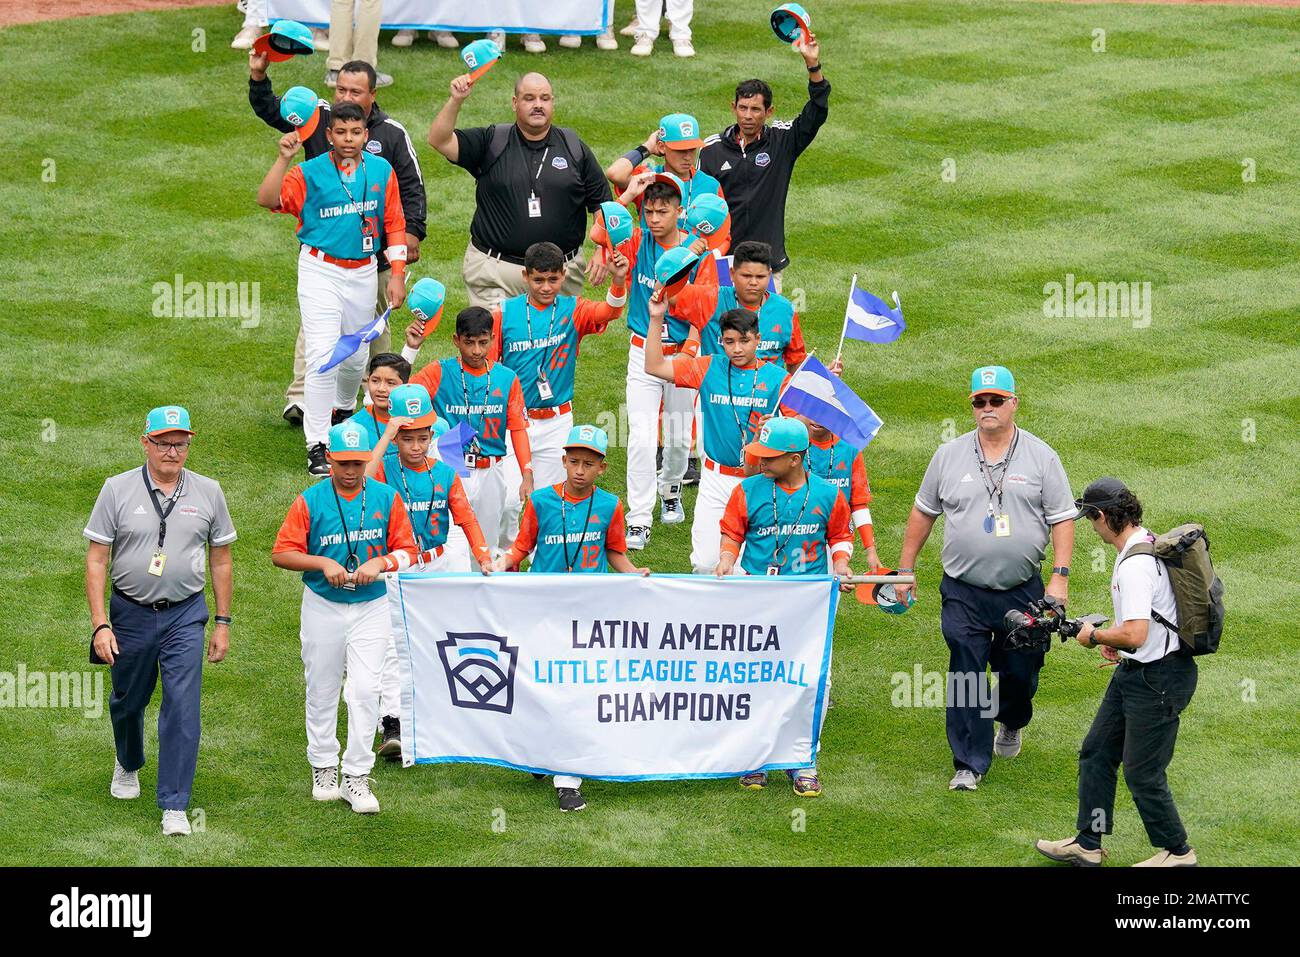 Latin America Region Champion Little League team from Managua